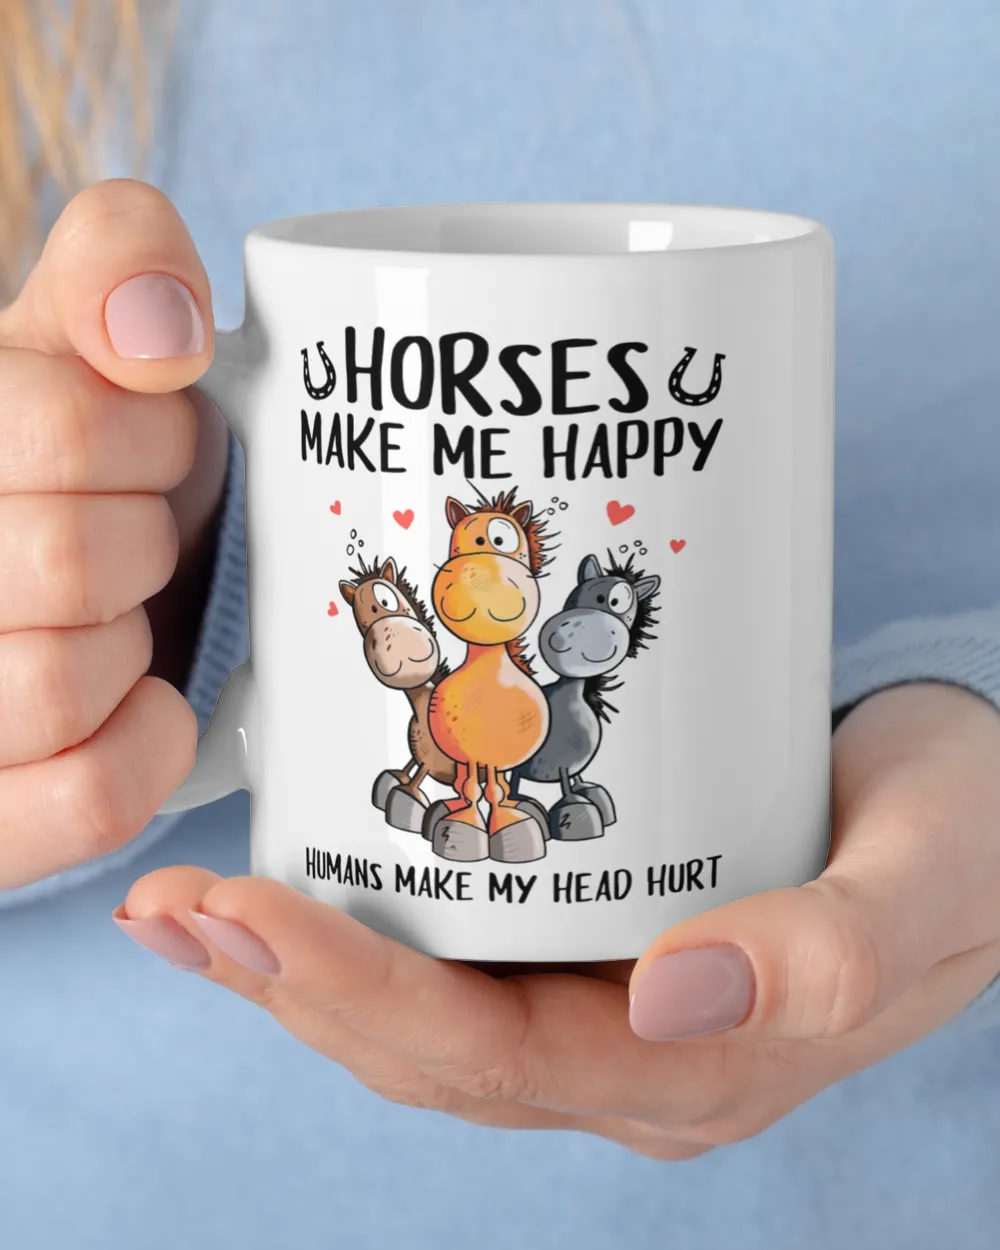 Horses make me happy Humans make my head hurt